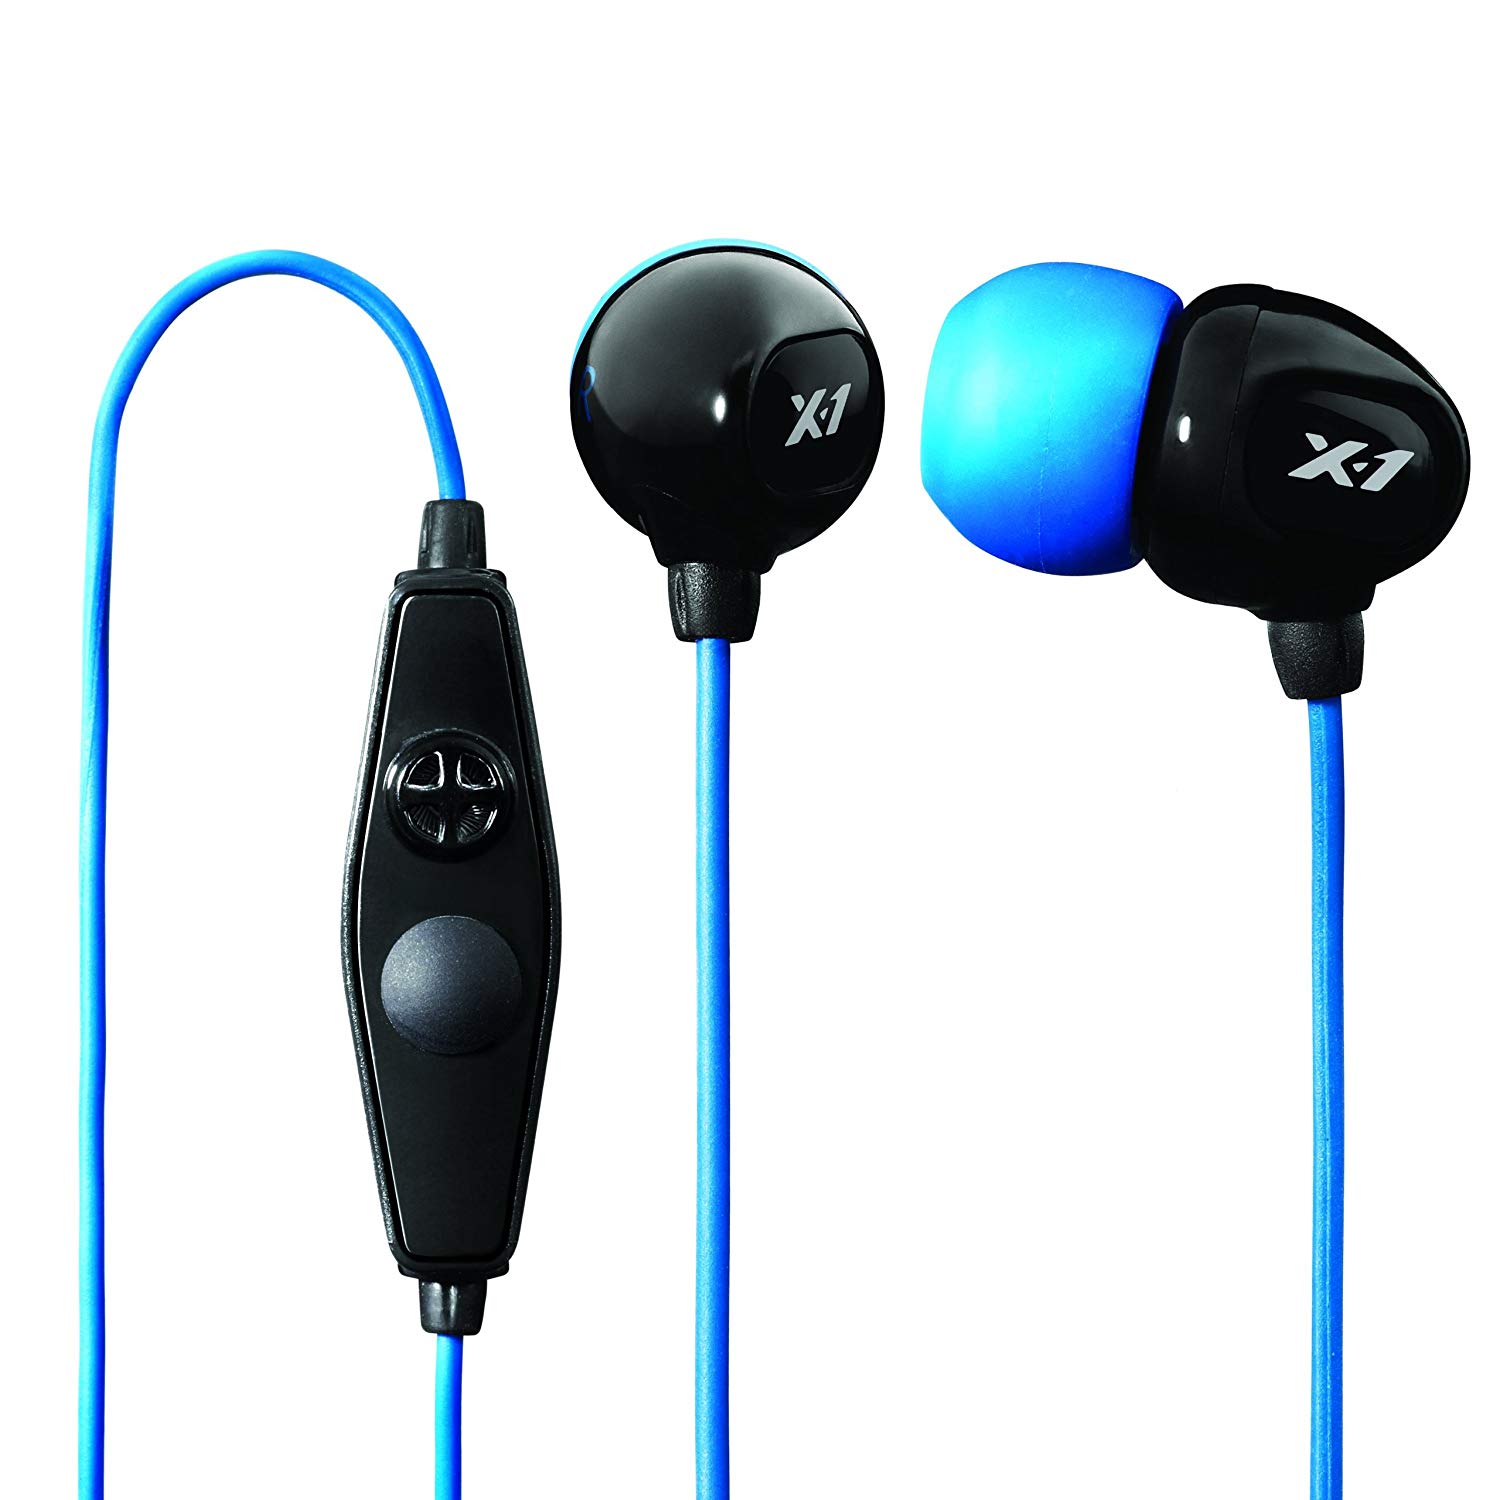 AGPTEK S12 8GB Waterproof Headphones for Swimming